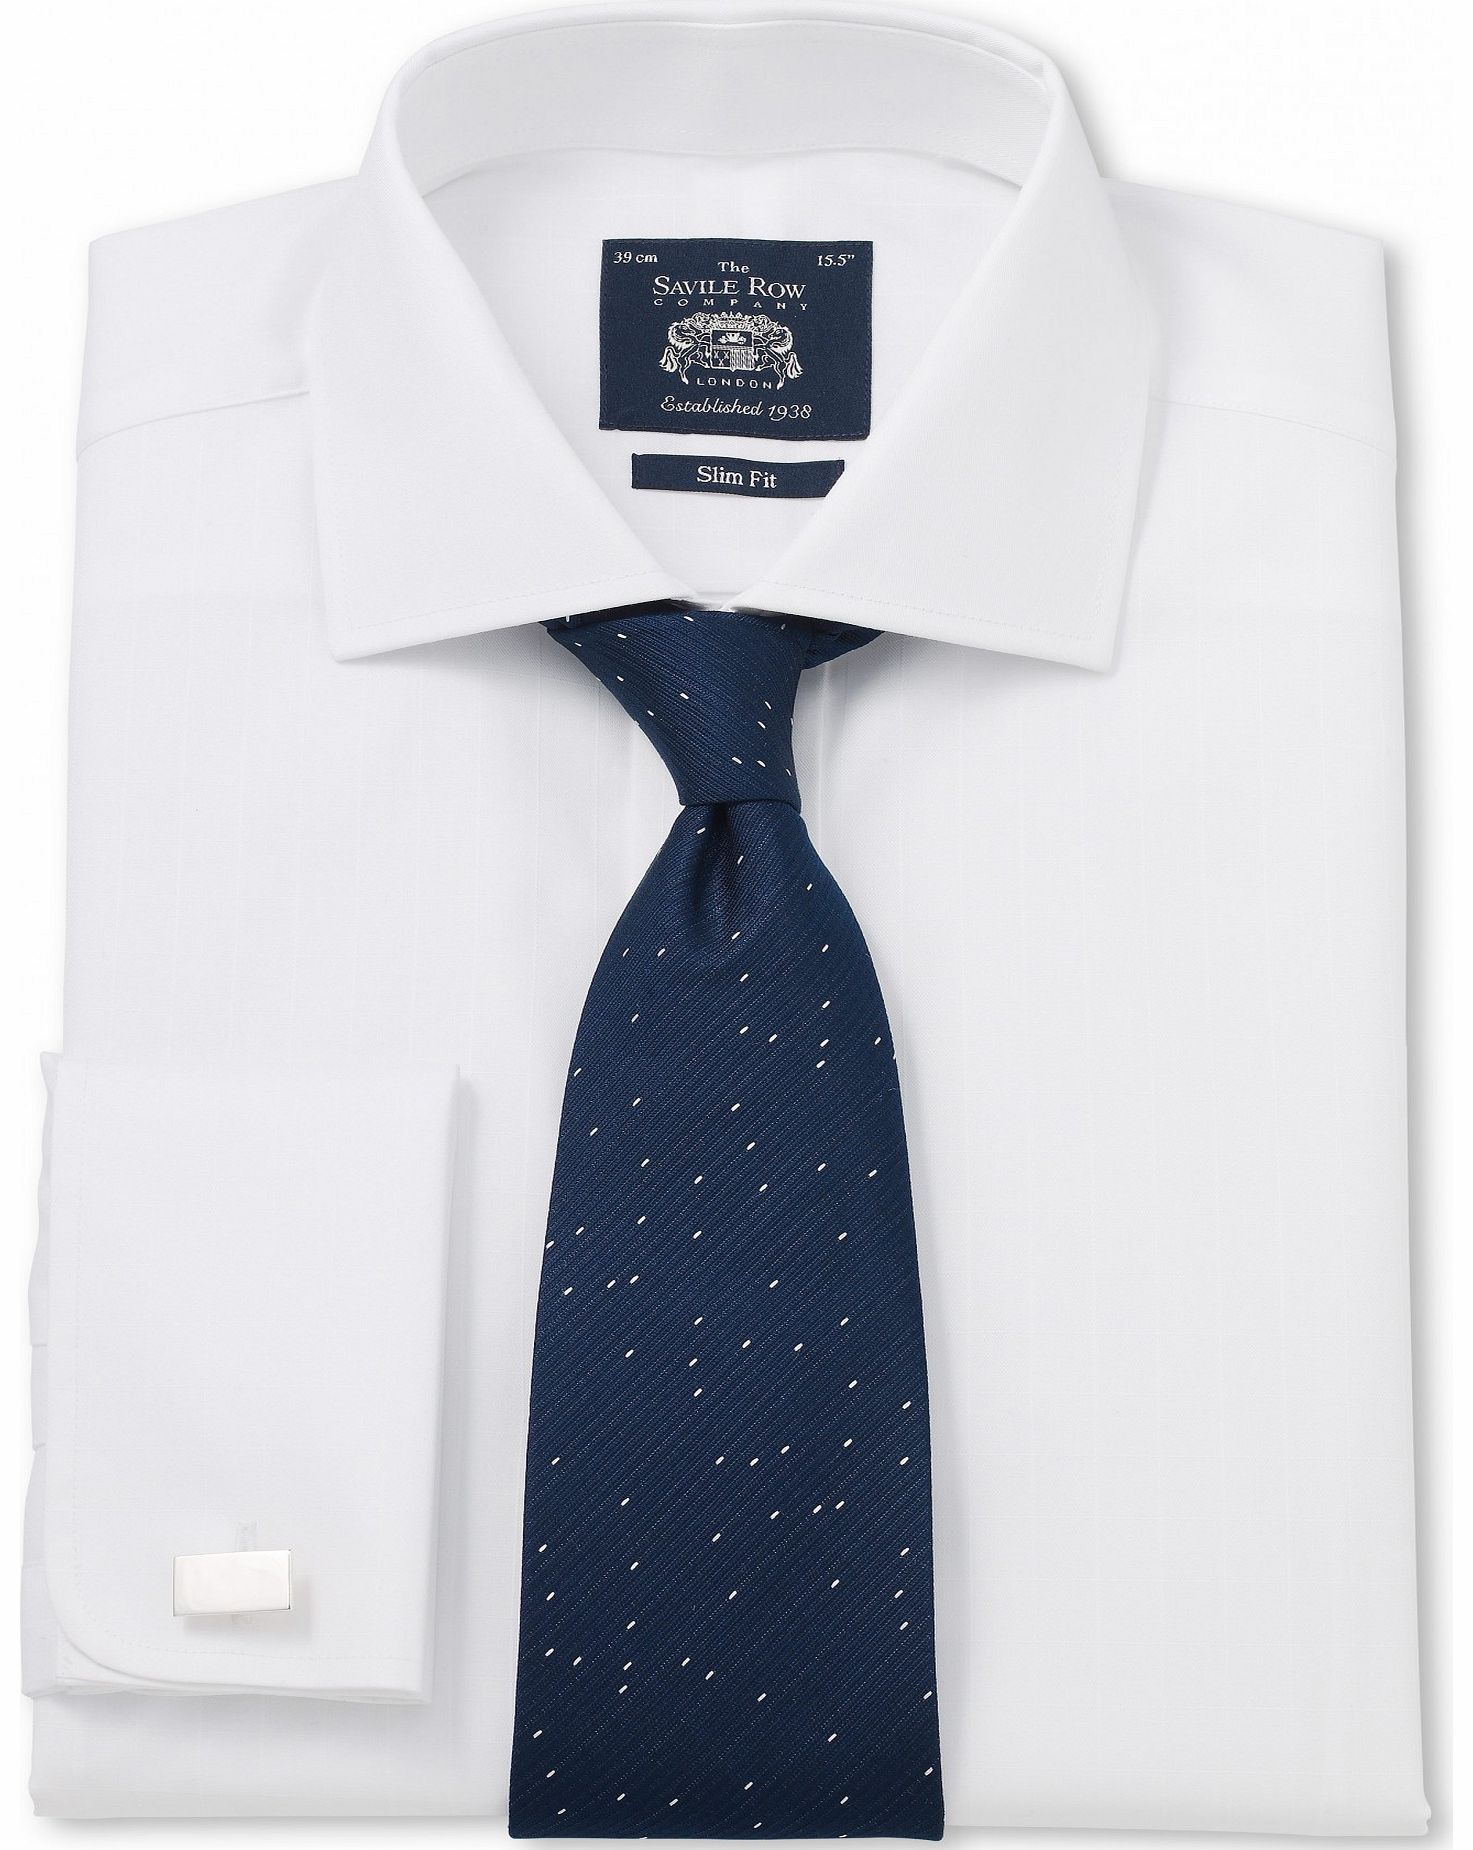 Savile Row Company White Poplin Check Slim Fit Shirt 15 1/2``